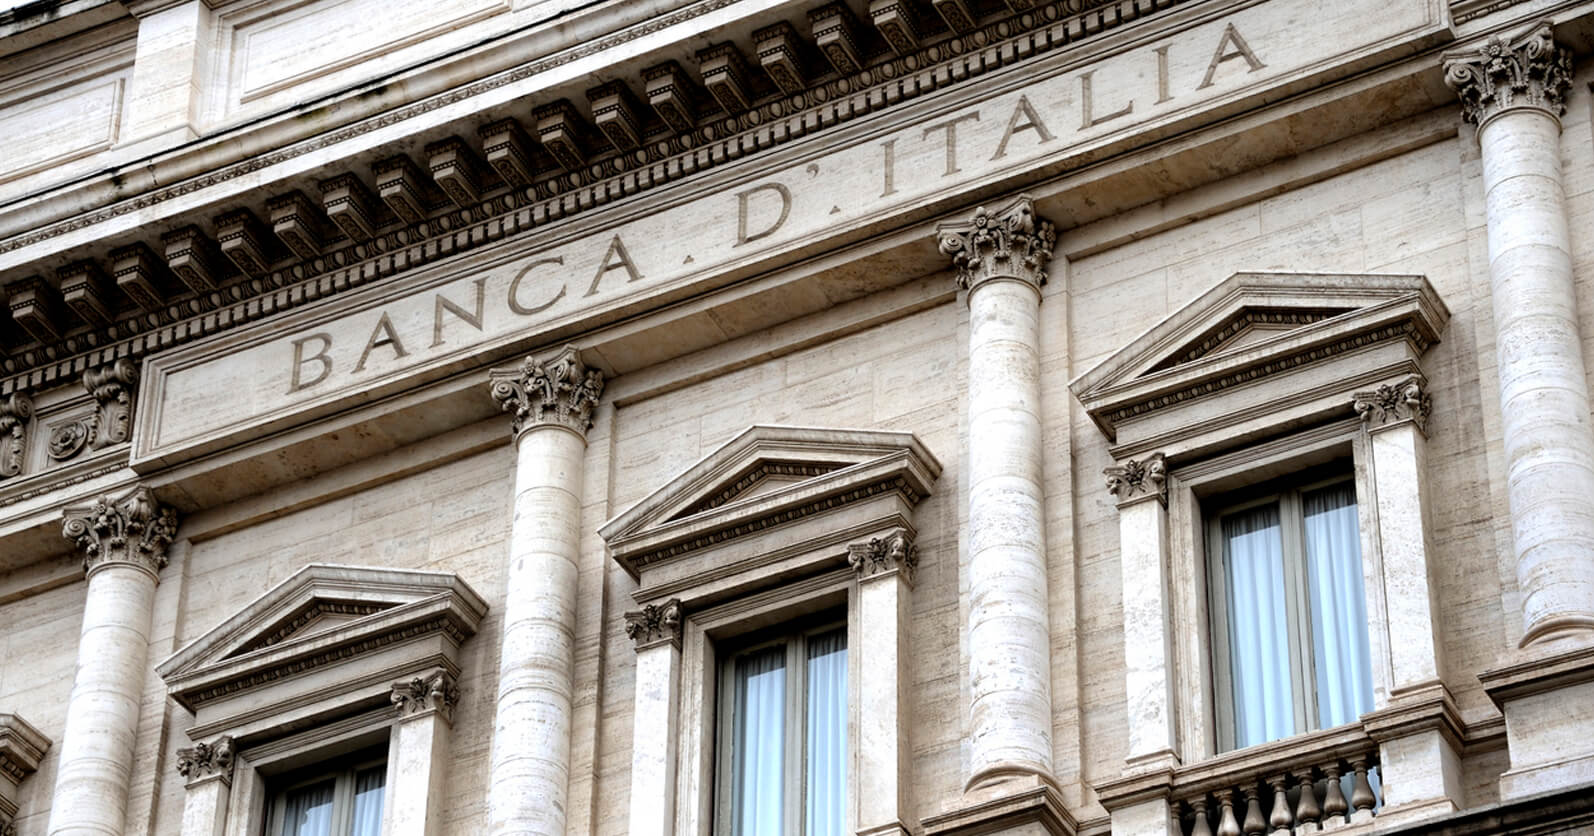 Opening an Italian bank account